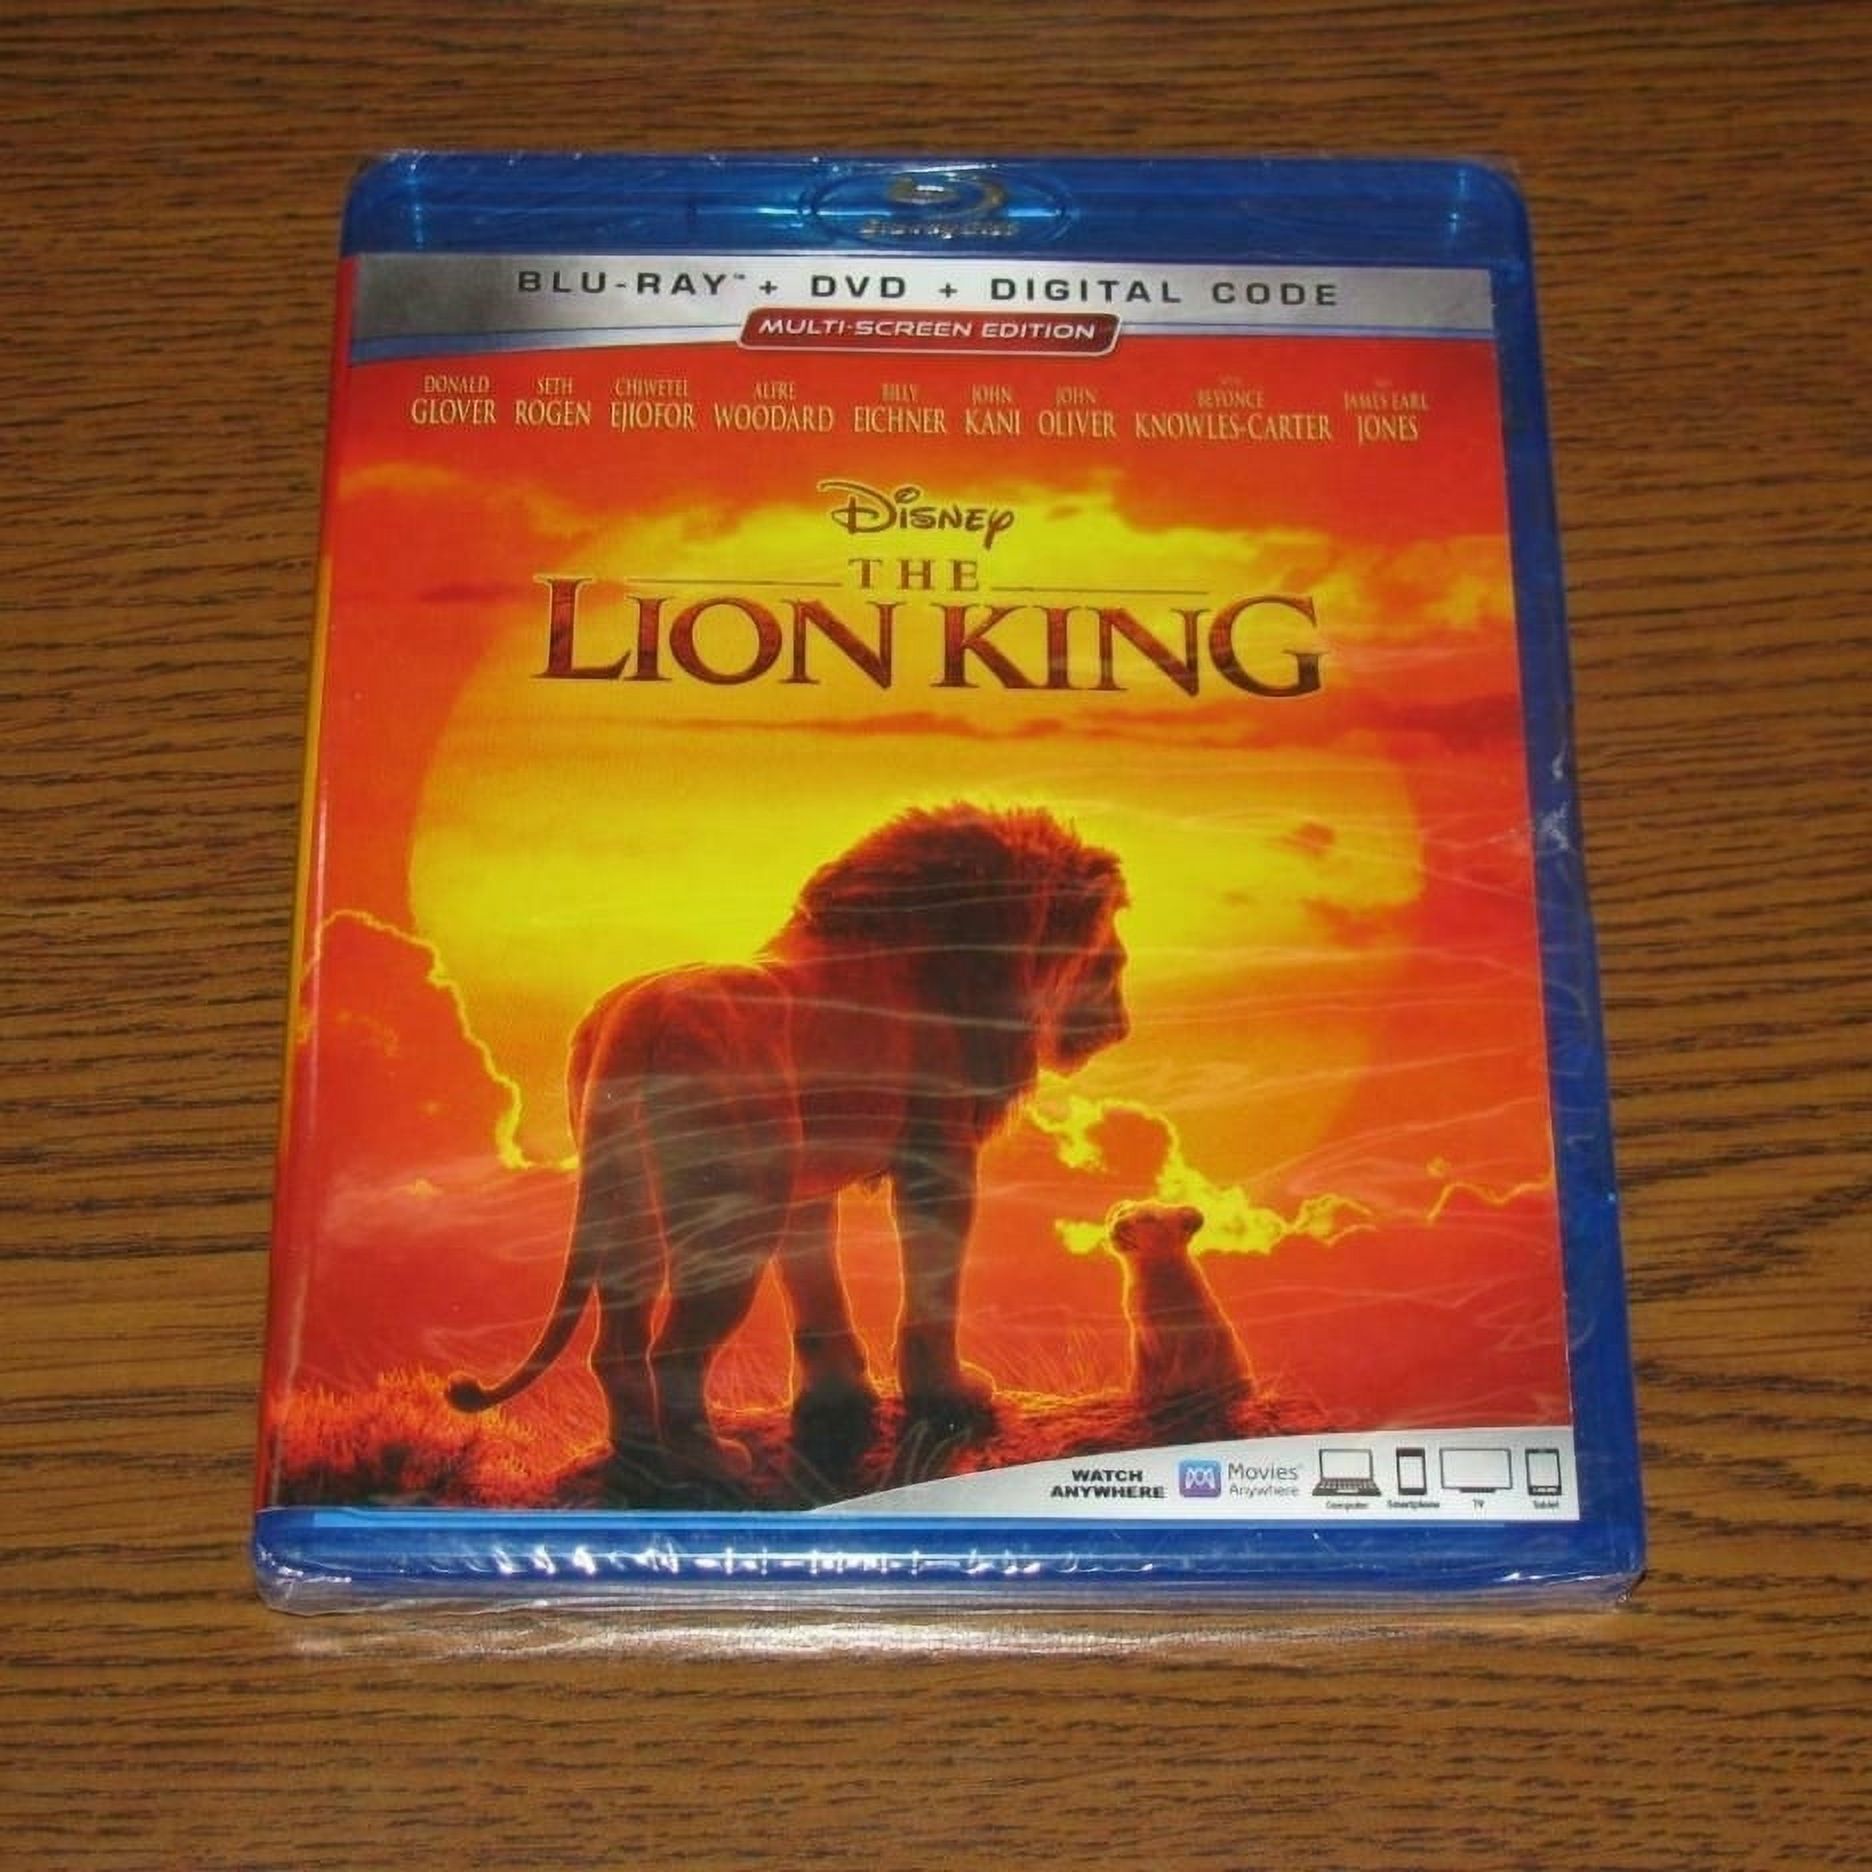 The Lion King 2019 (Blu-ray + DVD + Digital Copy) - image 3 of 6